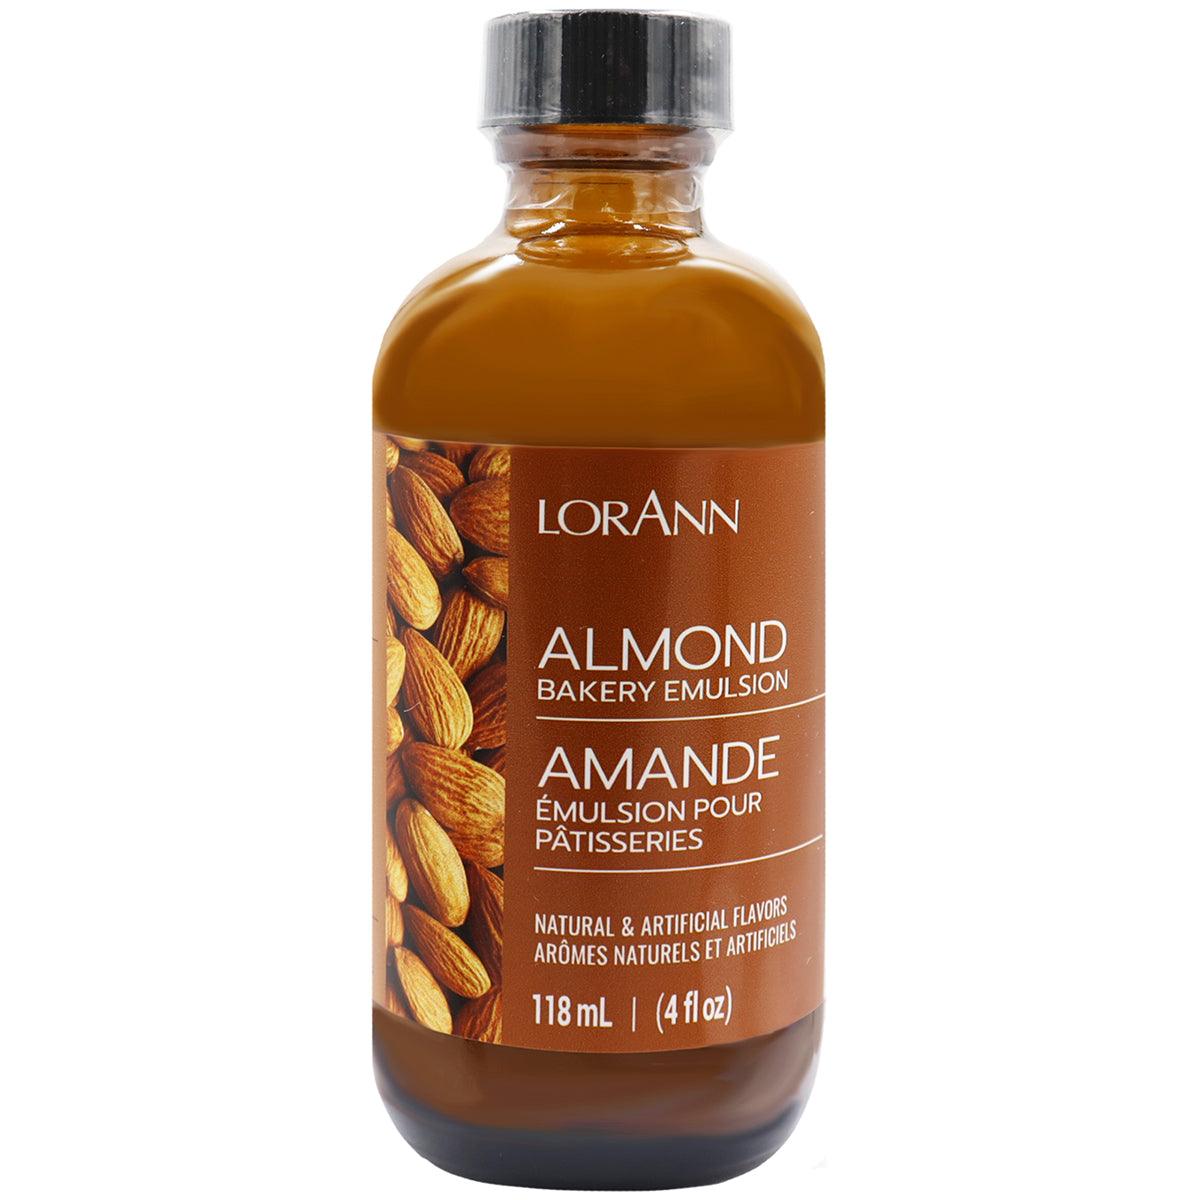 Almond Bakery Emulsion 4 fl oz (118ml) - ViaCheff.com